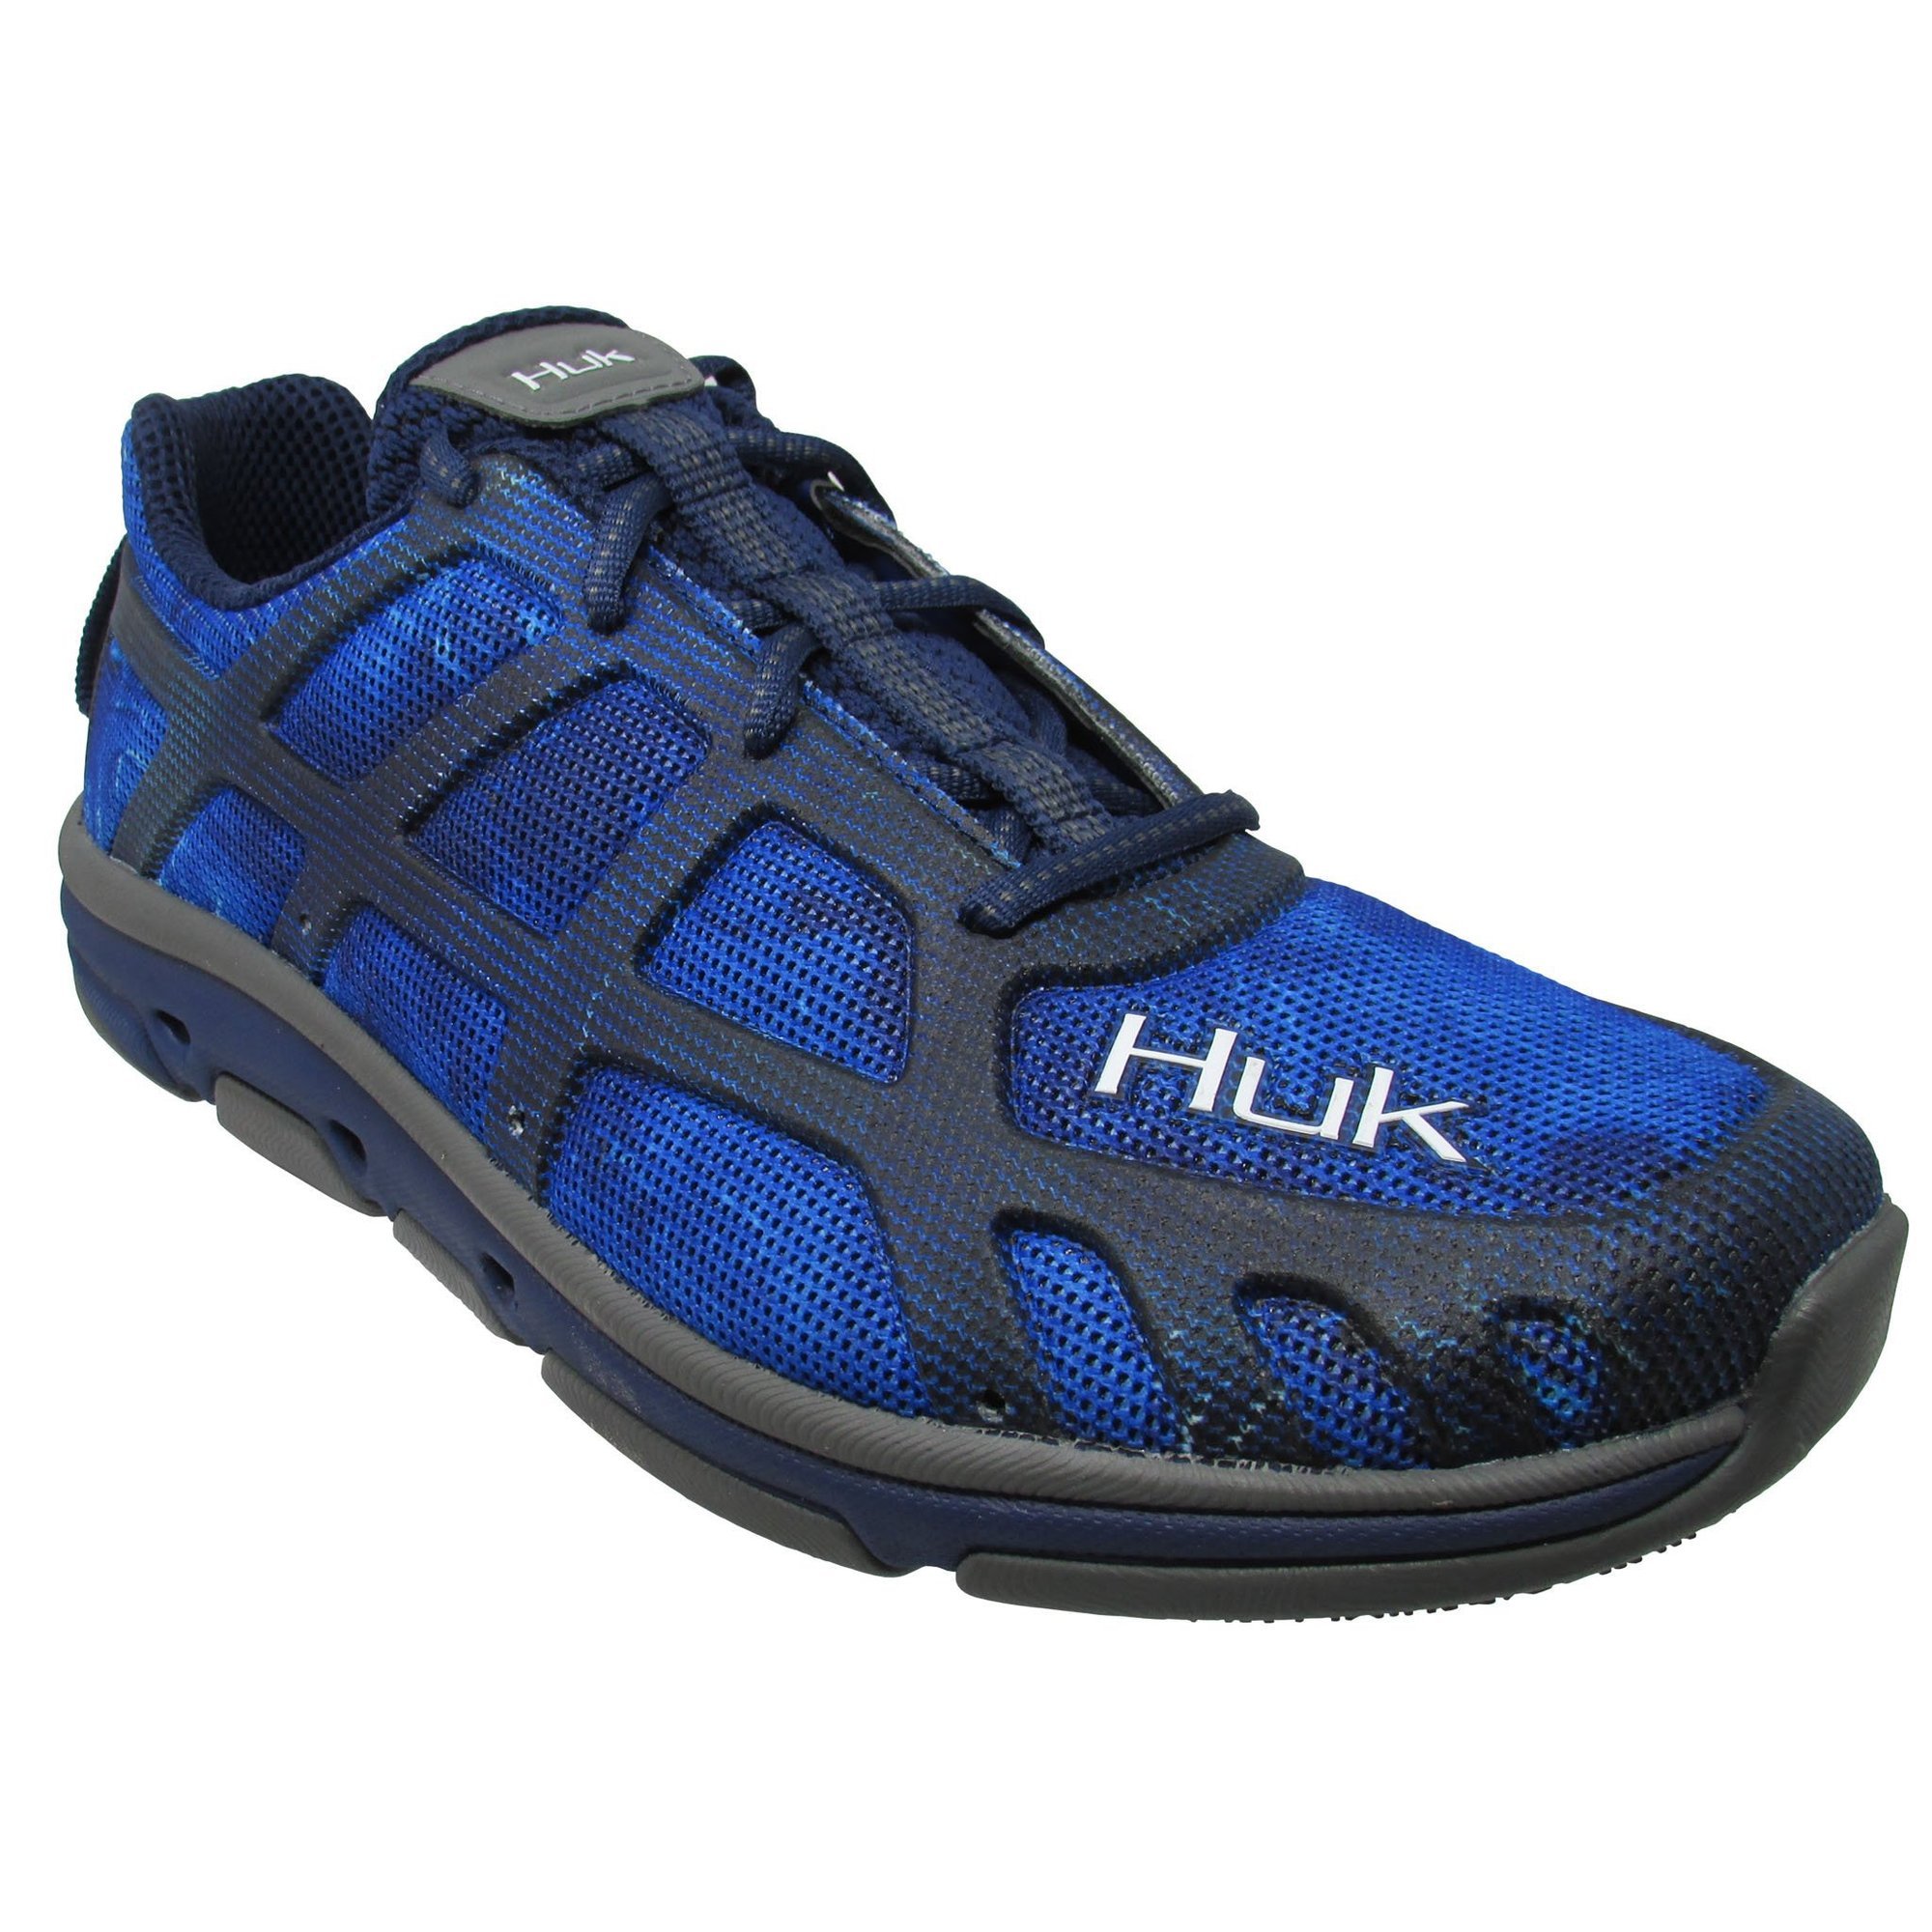 https://anglerschannel.com/wp-content/uploads/2019/12/Huk-Attack-shoe.jpg